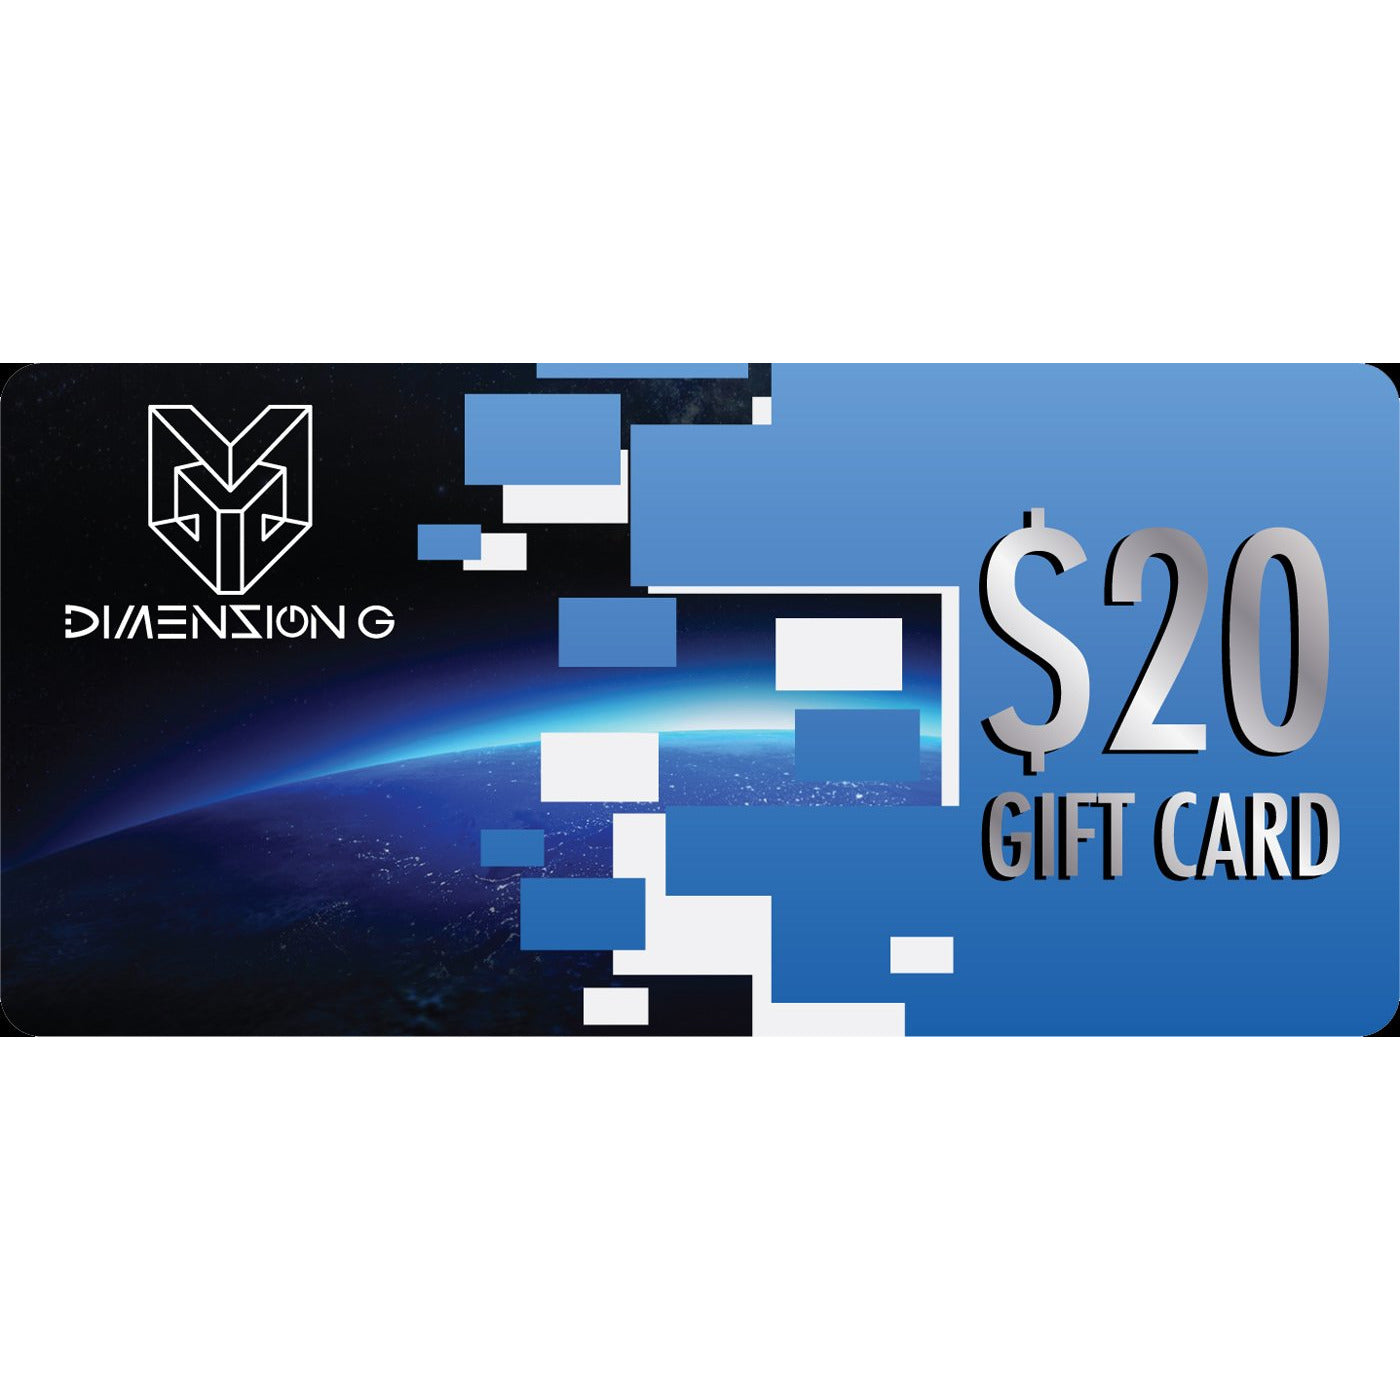 Dimension G Gift Card